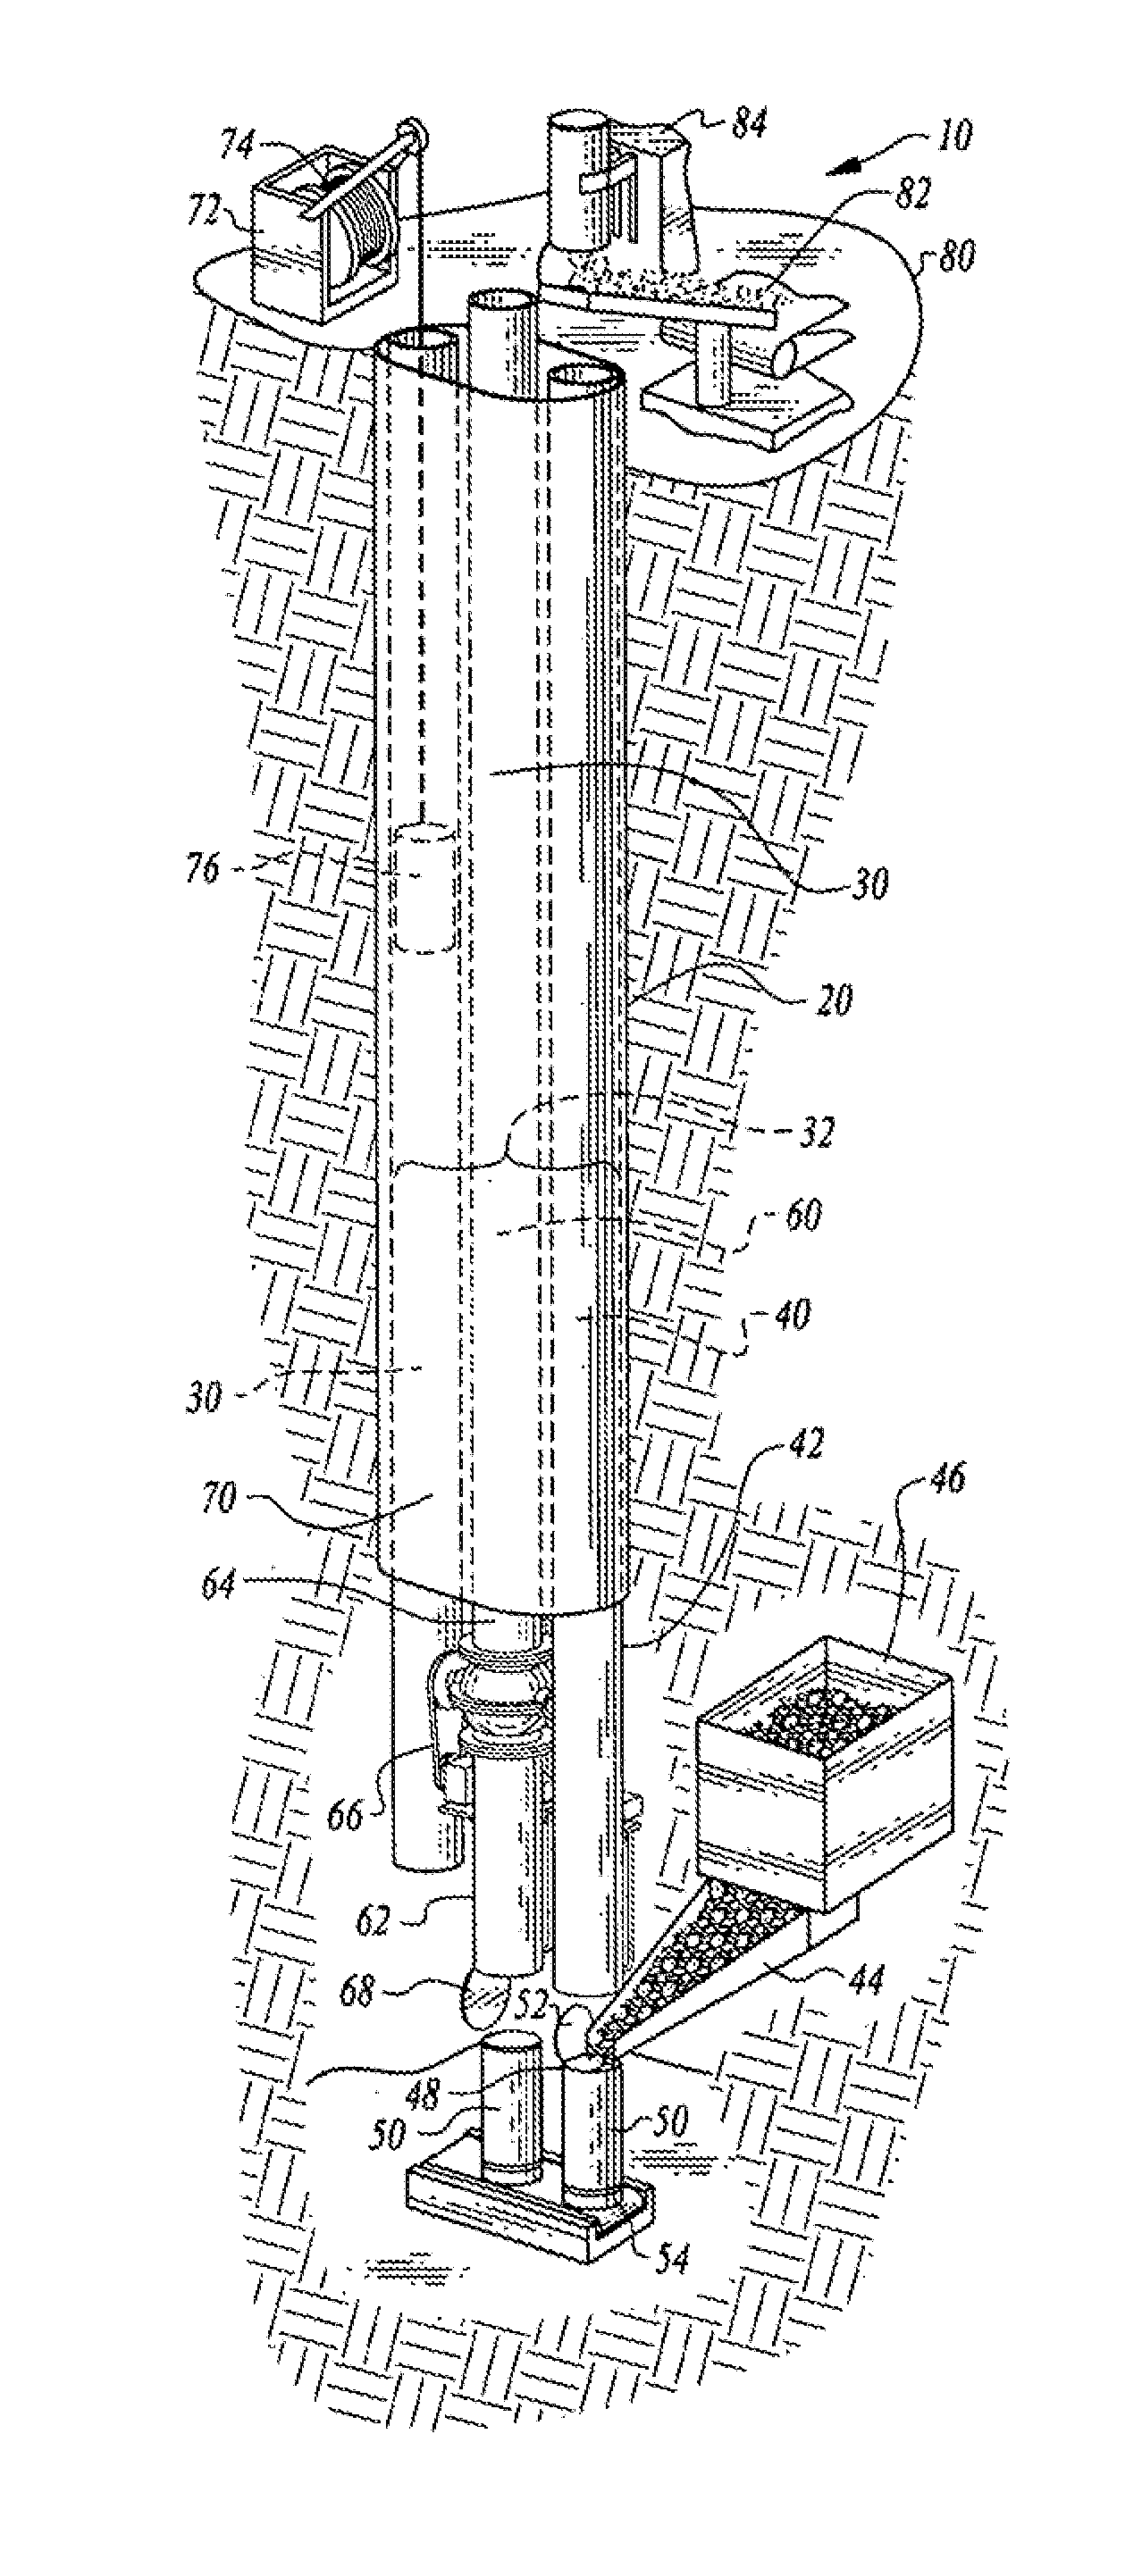 Hydraulic elevation apparatus and method